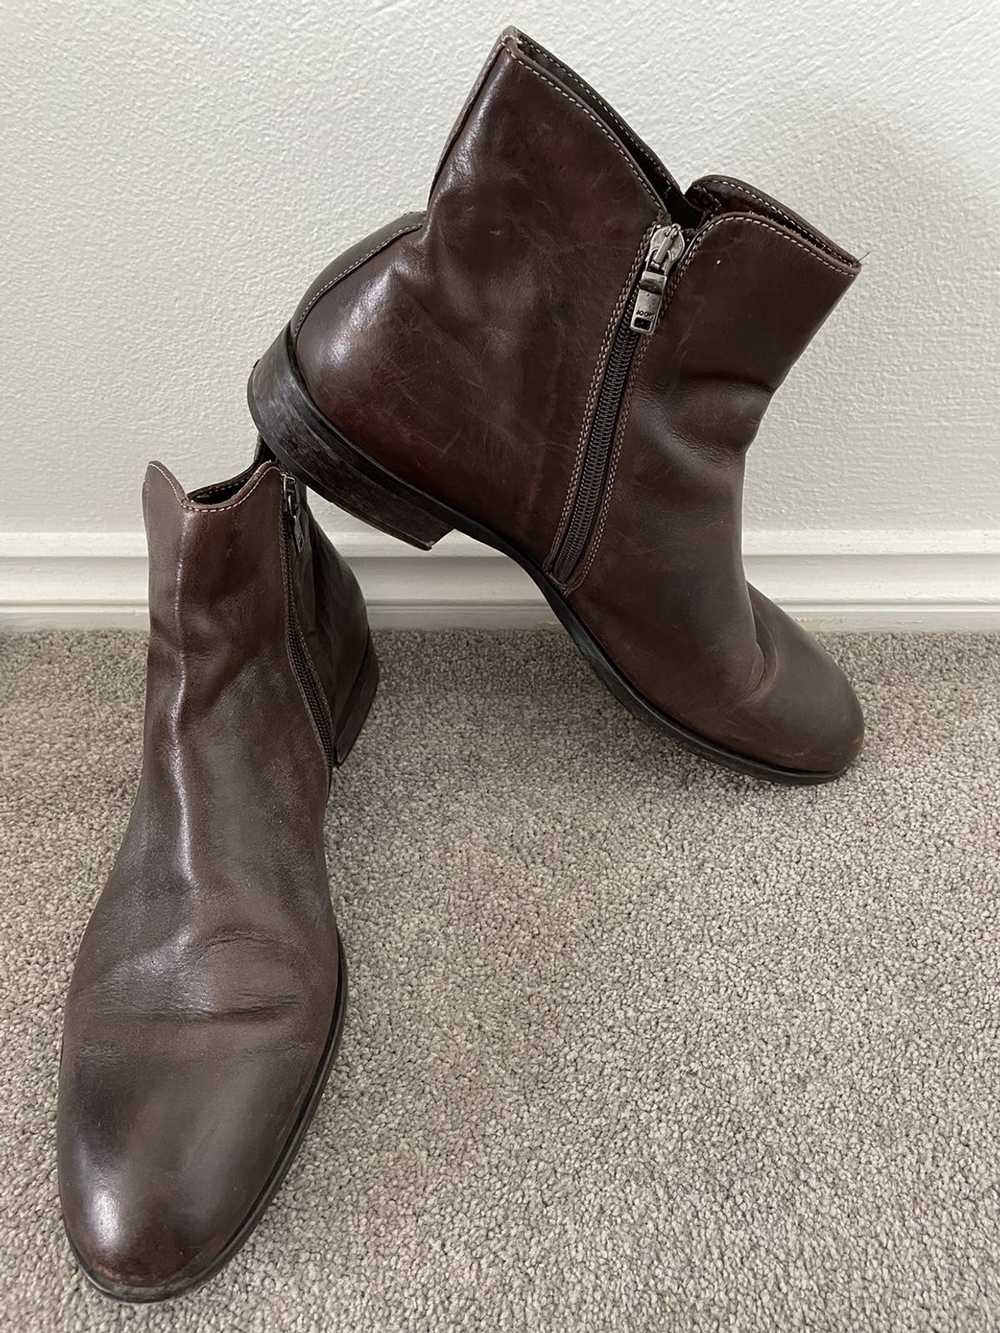 Joop! Joop brown leather side zip boots size 44 - image 1